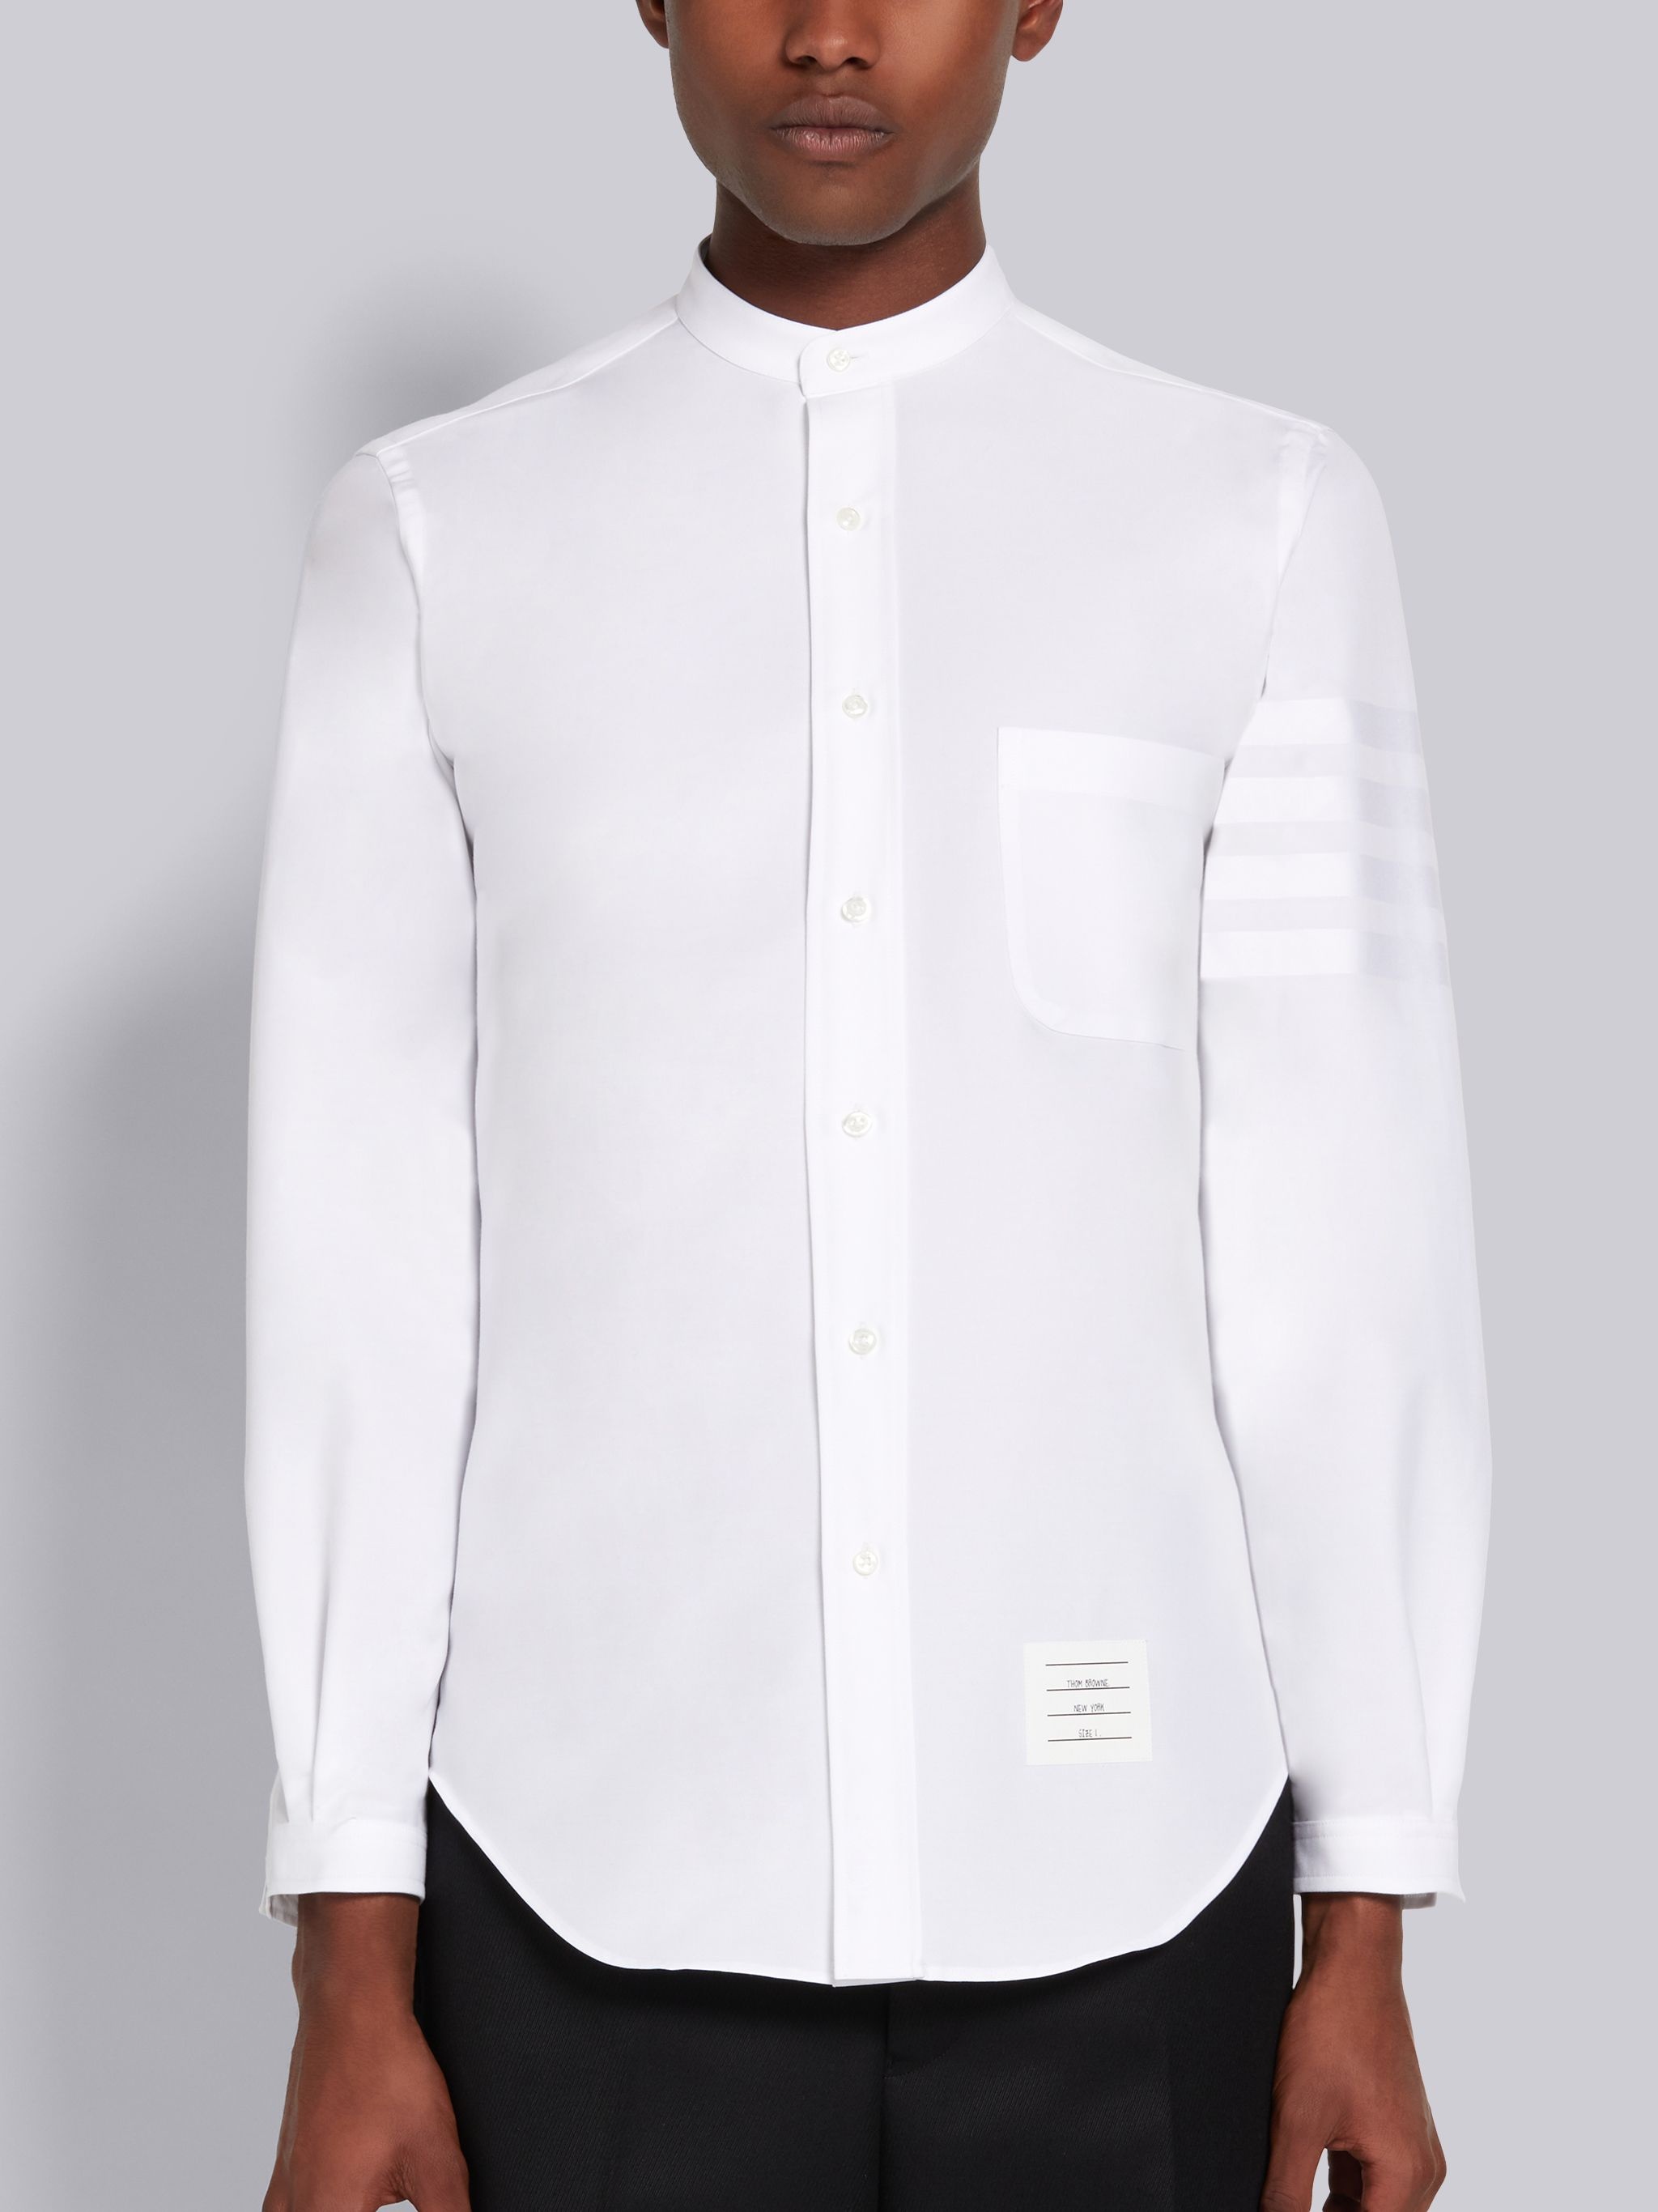 White Satin Weave Oxford Engineered 4-Bar Stripe Band Collar Classic Button Down Shirt - 3